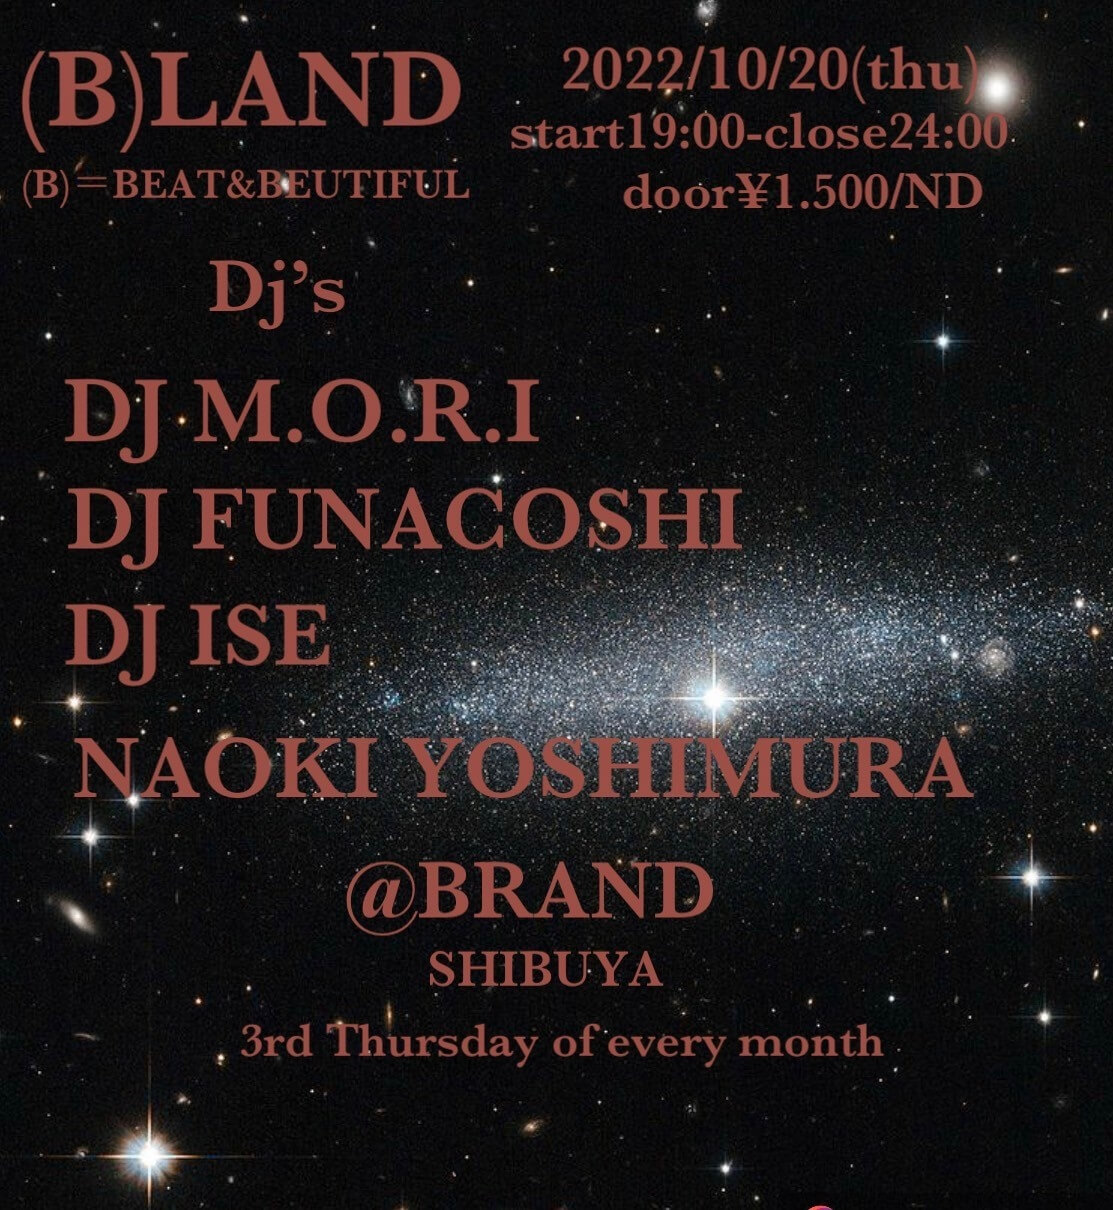 【（B）LAND】 2022年10月20日（木曜日）に渋谷 クラブのBRAND SHIBUYAで開催されるイベント